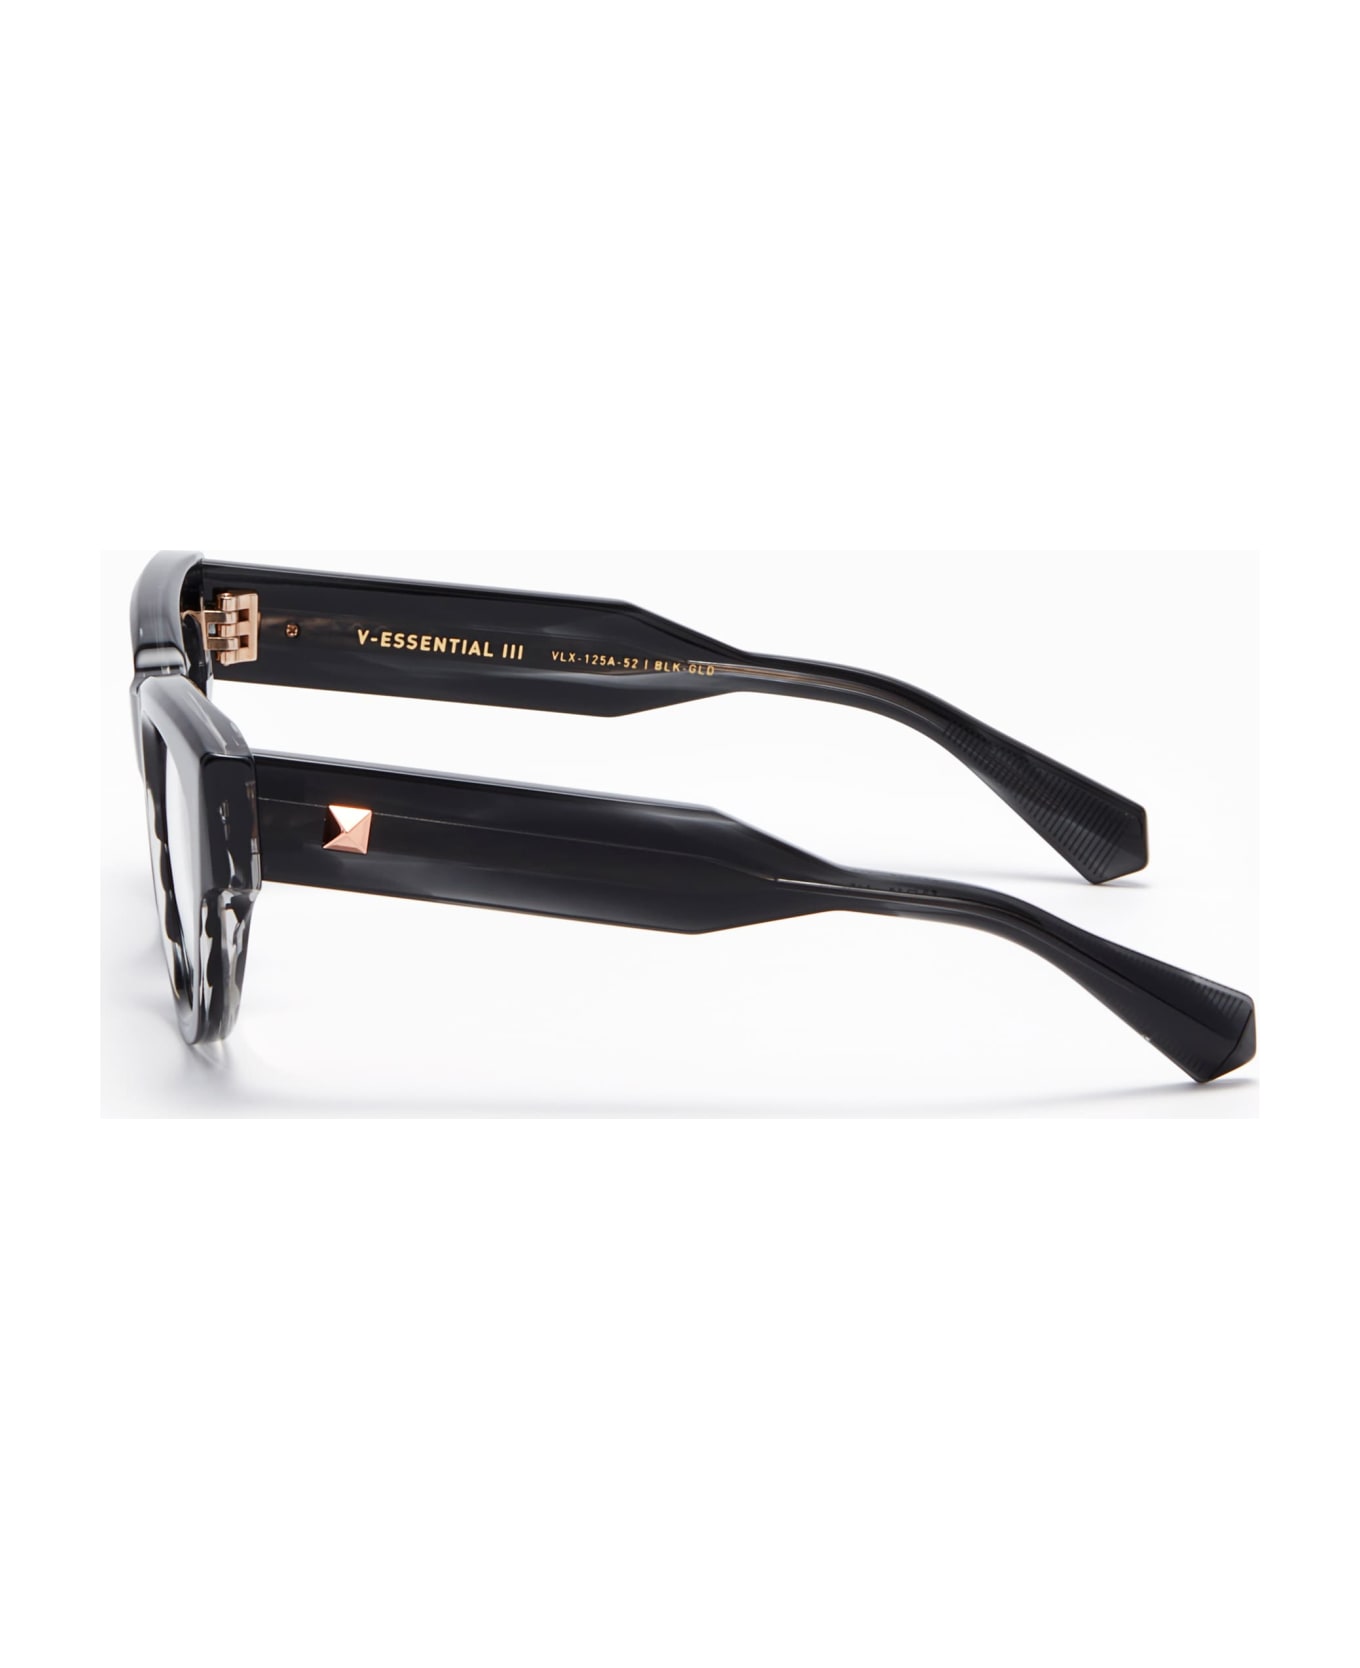 Valentino Eyewear V-essential Iii - Black Swirl Rx Glasses - Black アイウェア